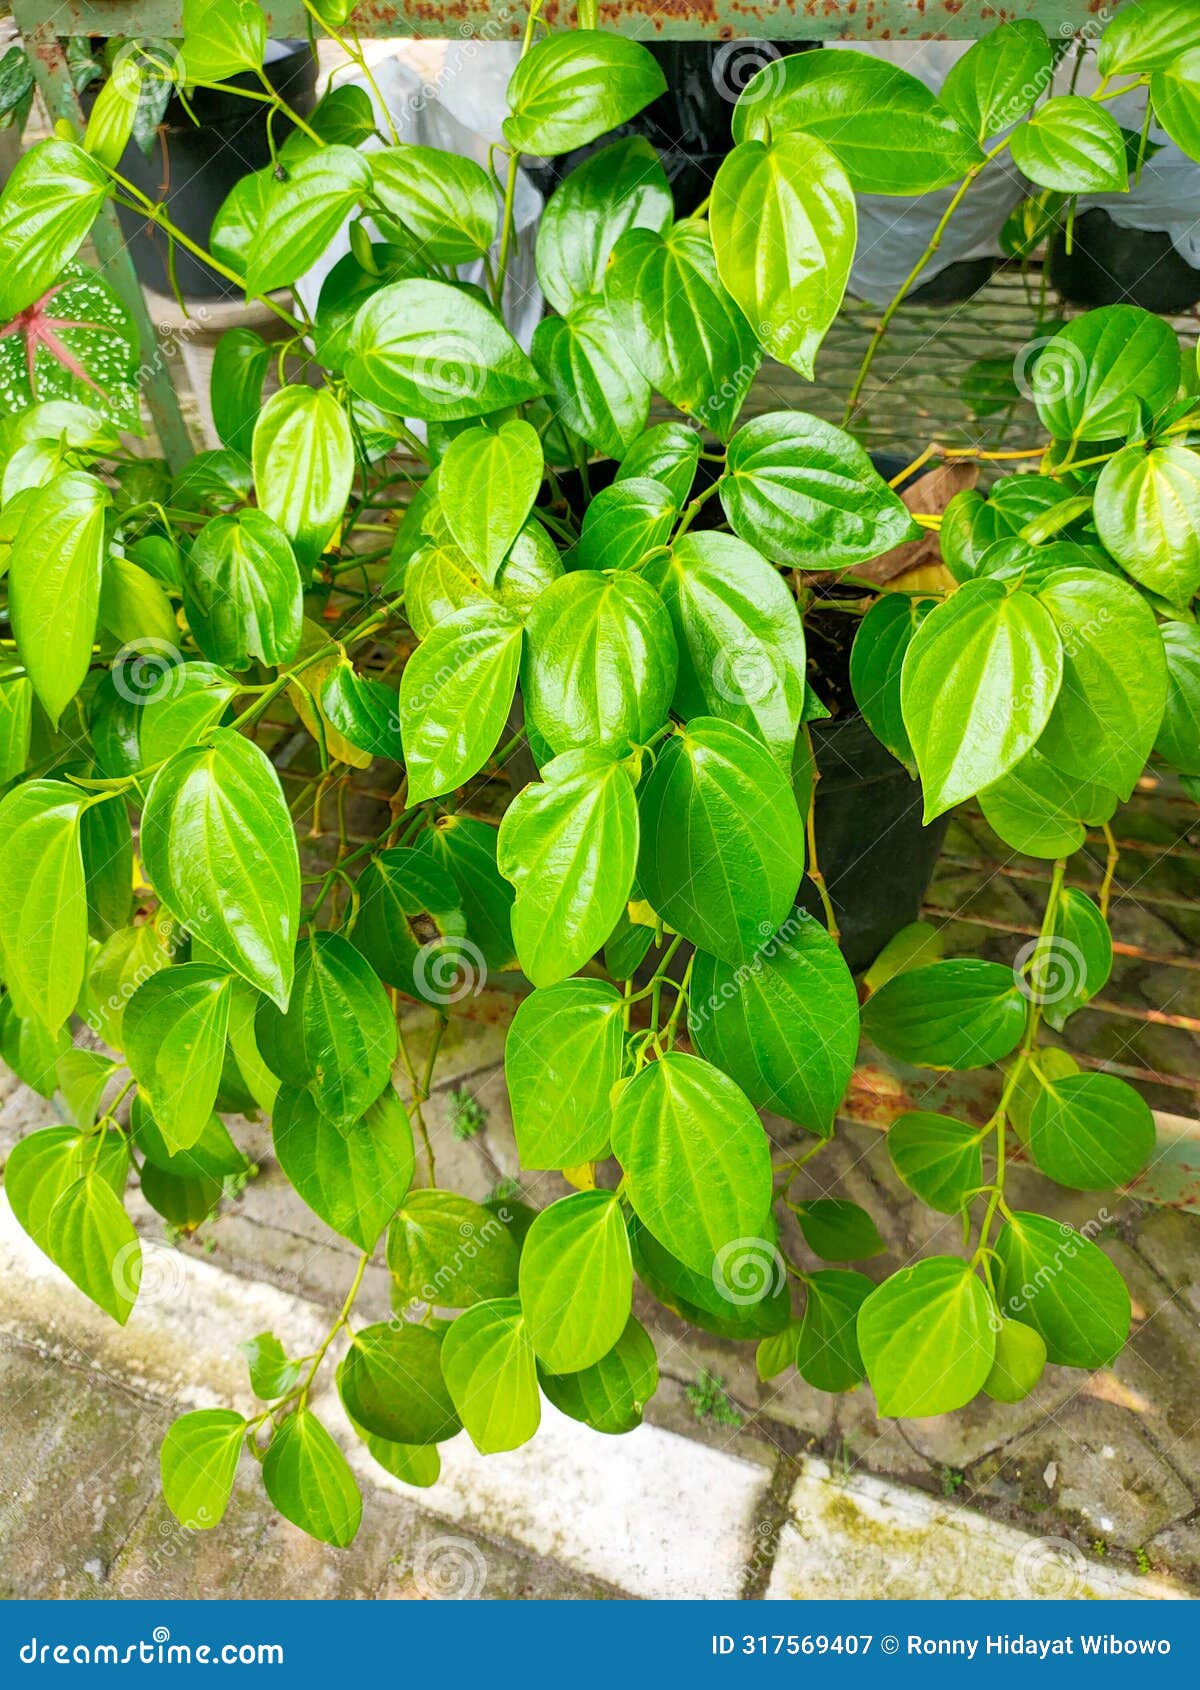 piper betle linn (in indonesian daun sirih hijau).